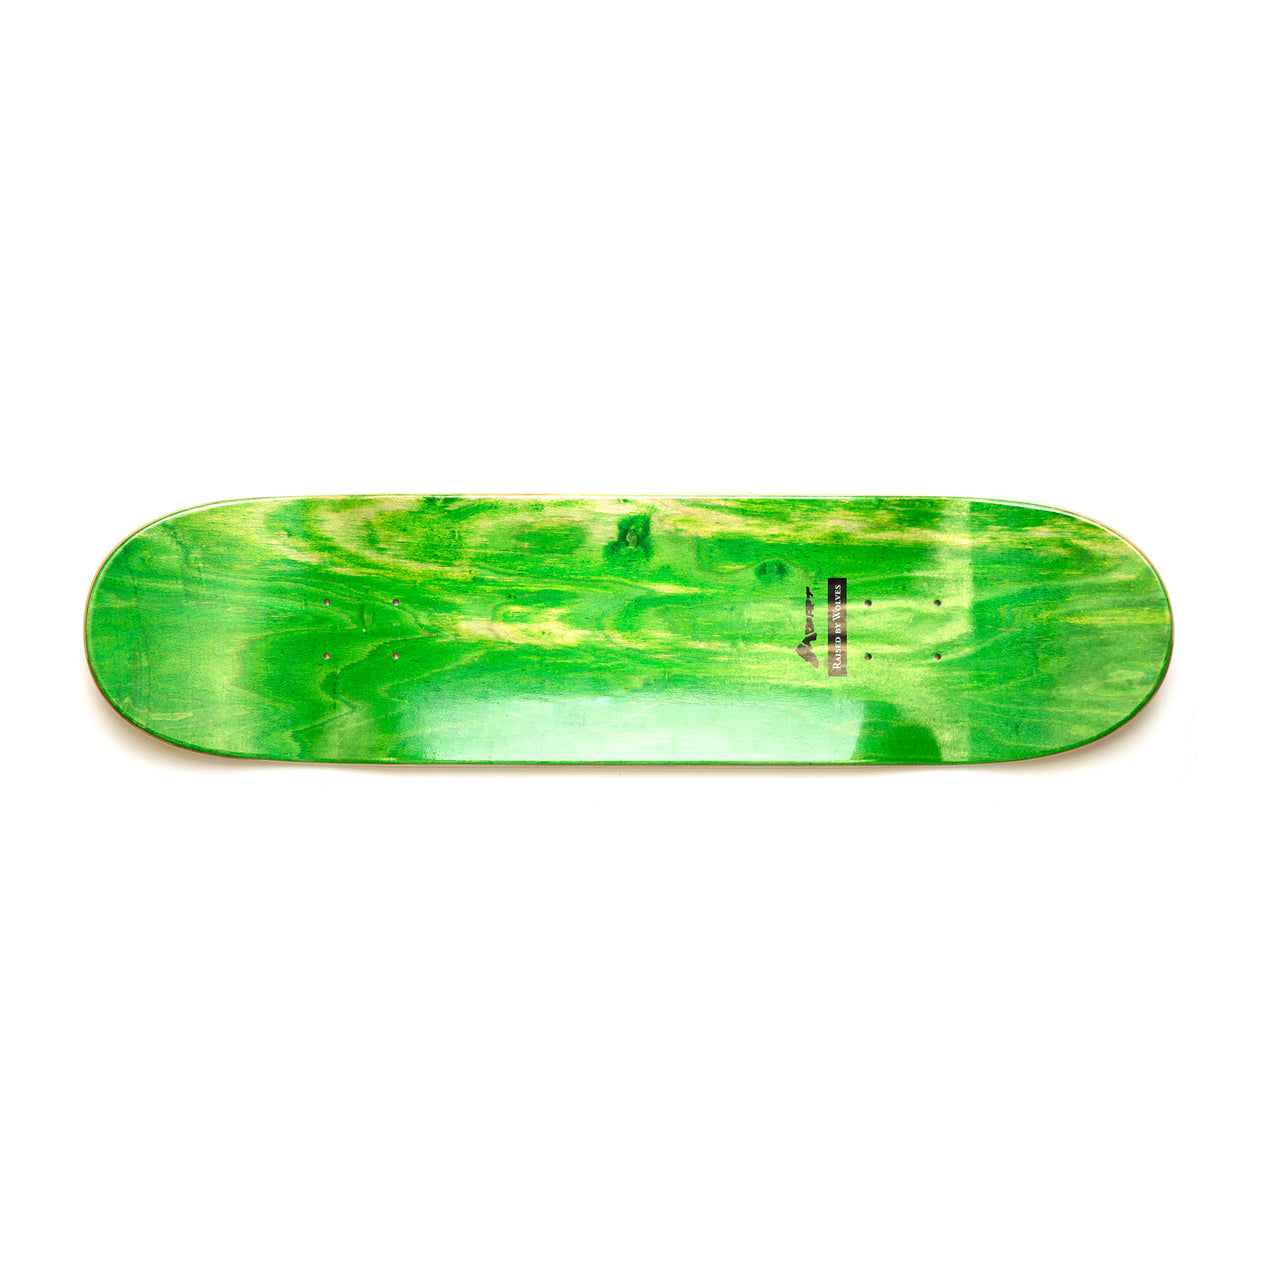 Mort 8.25" Skateboard Deck - Green/Gold